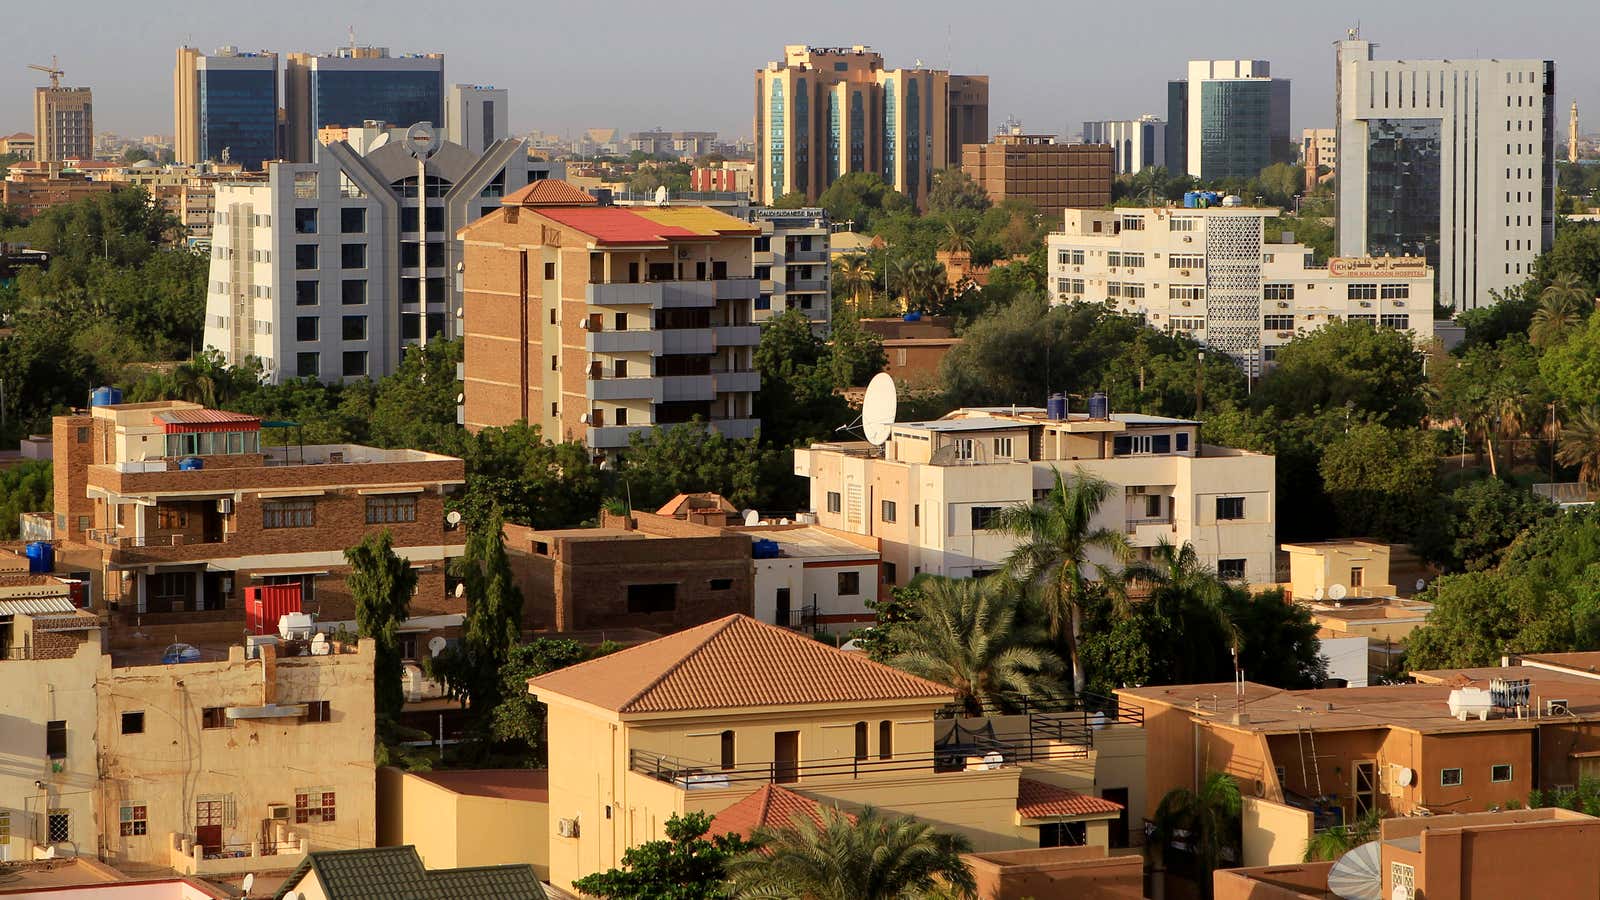 Secretive private developments threaten historic areas of Khartoum.